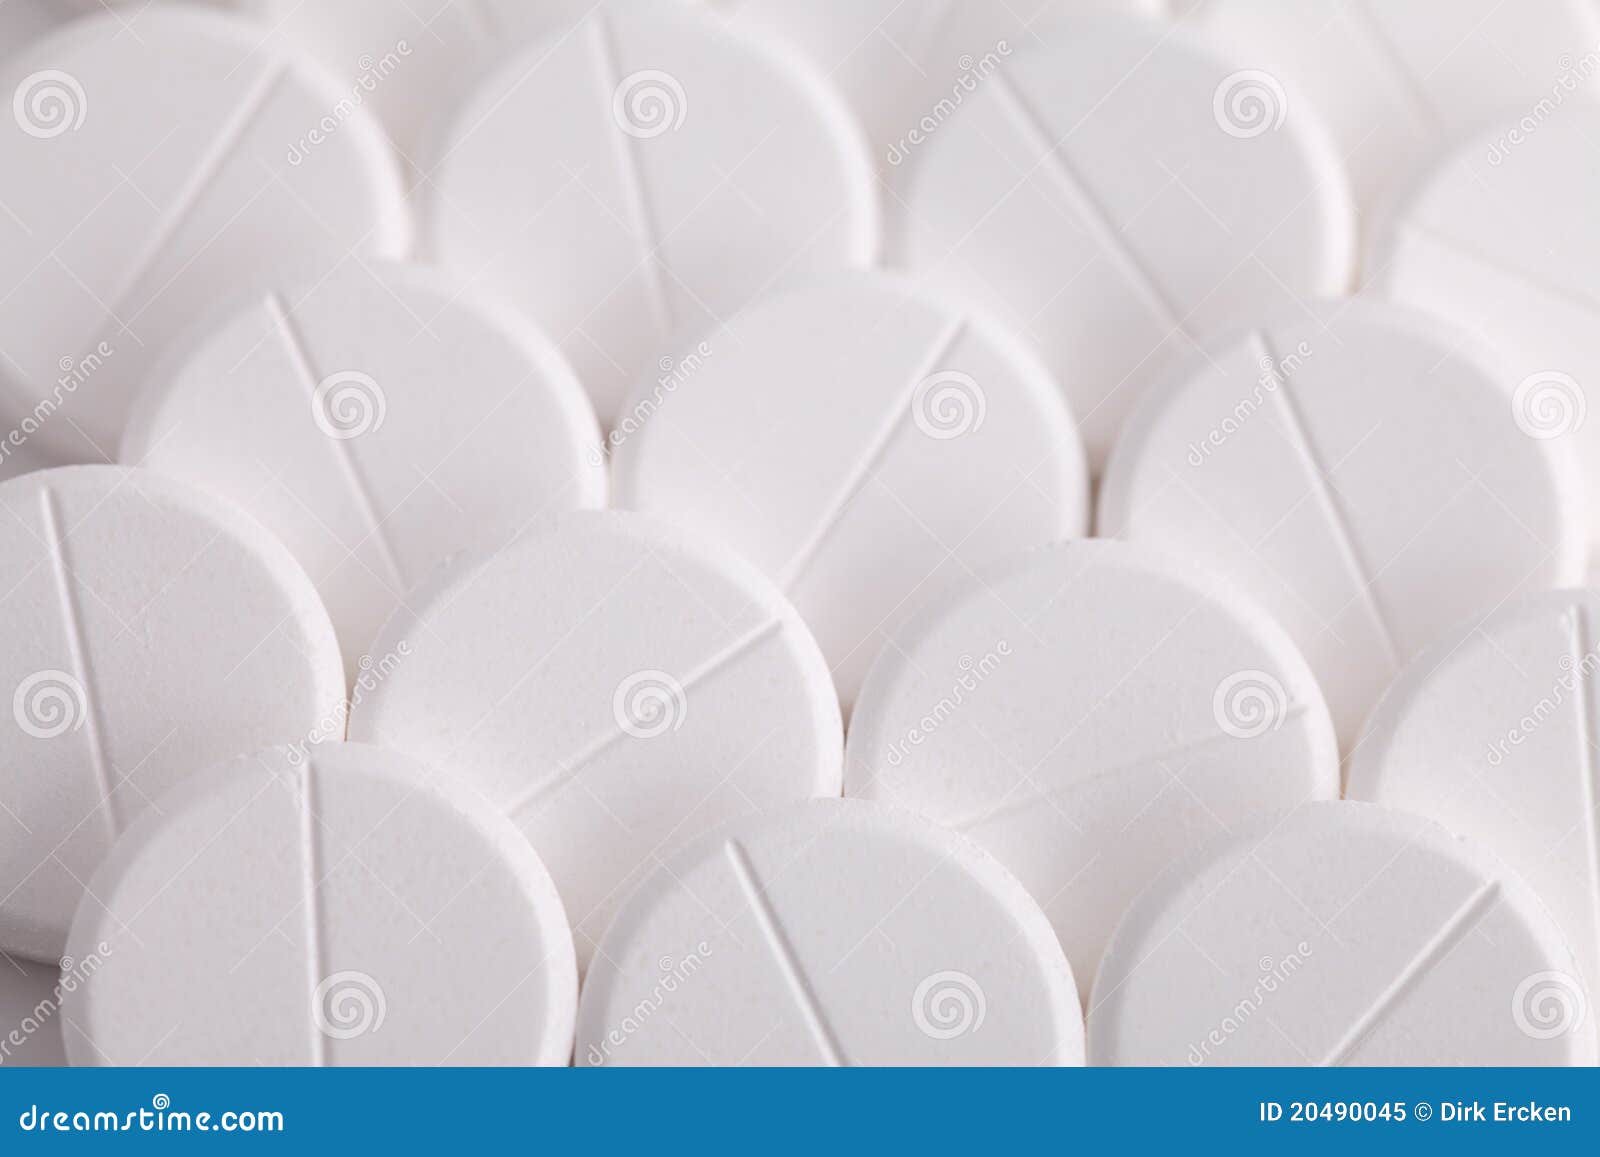 round white pills paracetamol aspirin painkiller